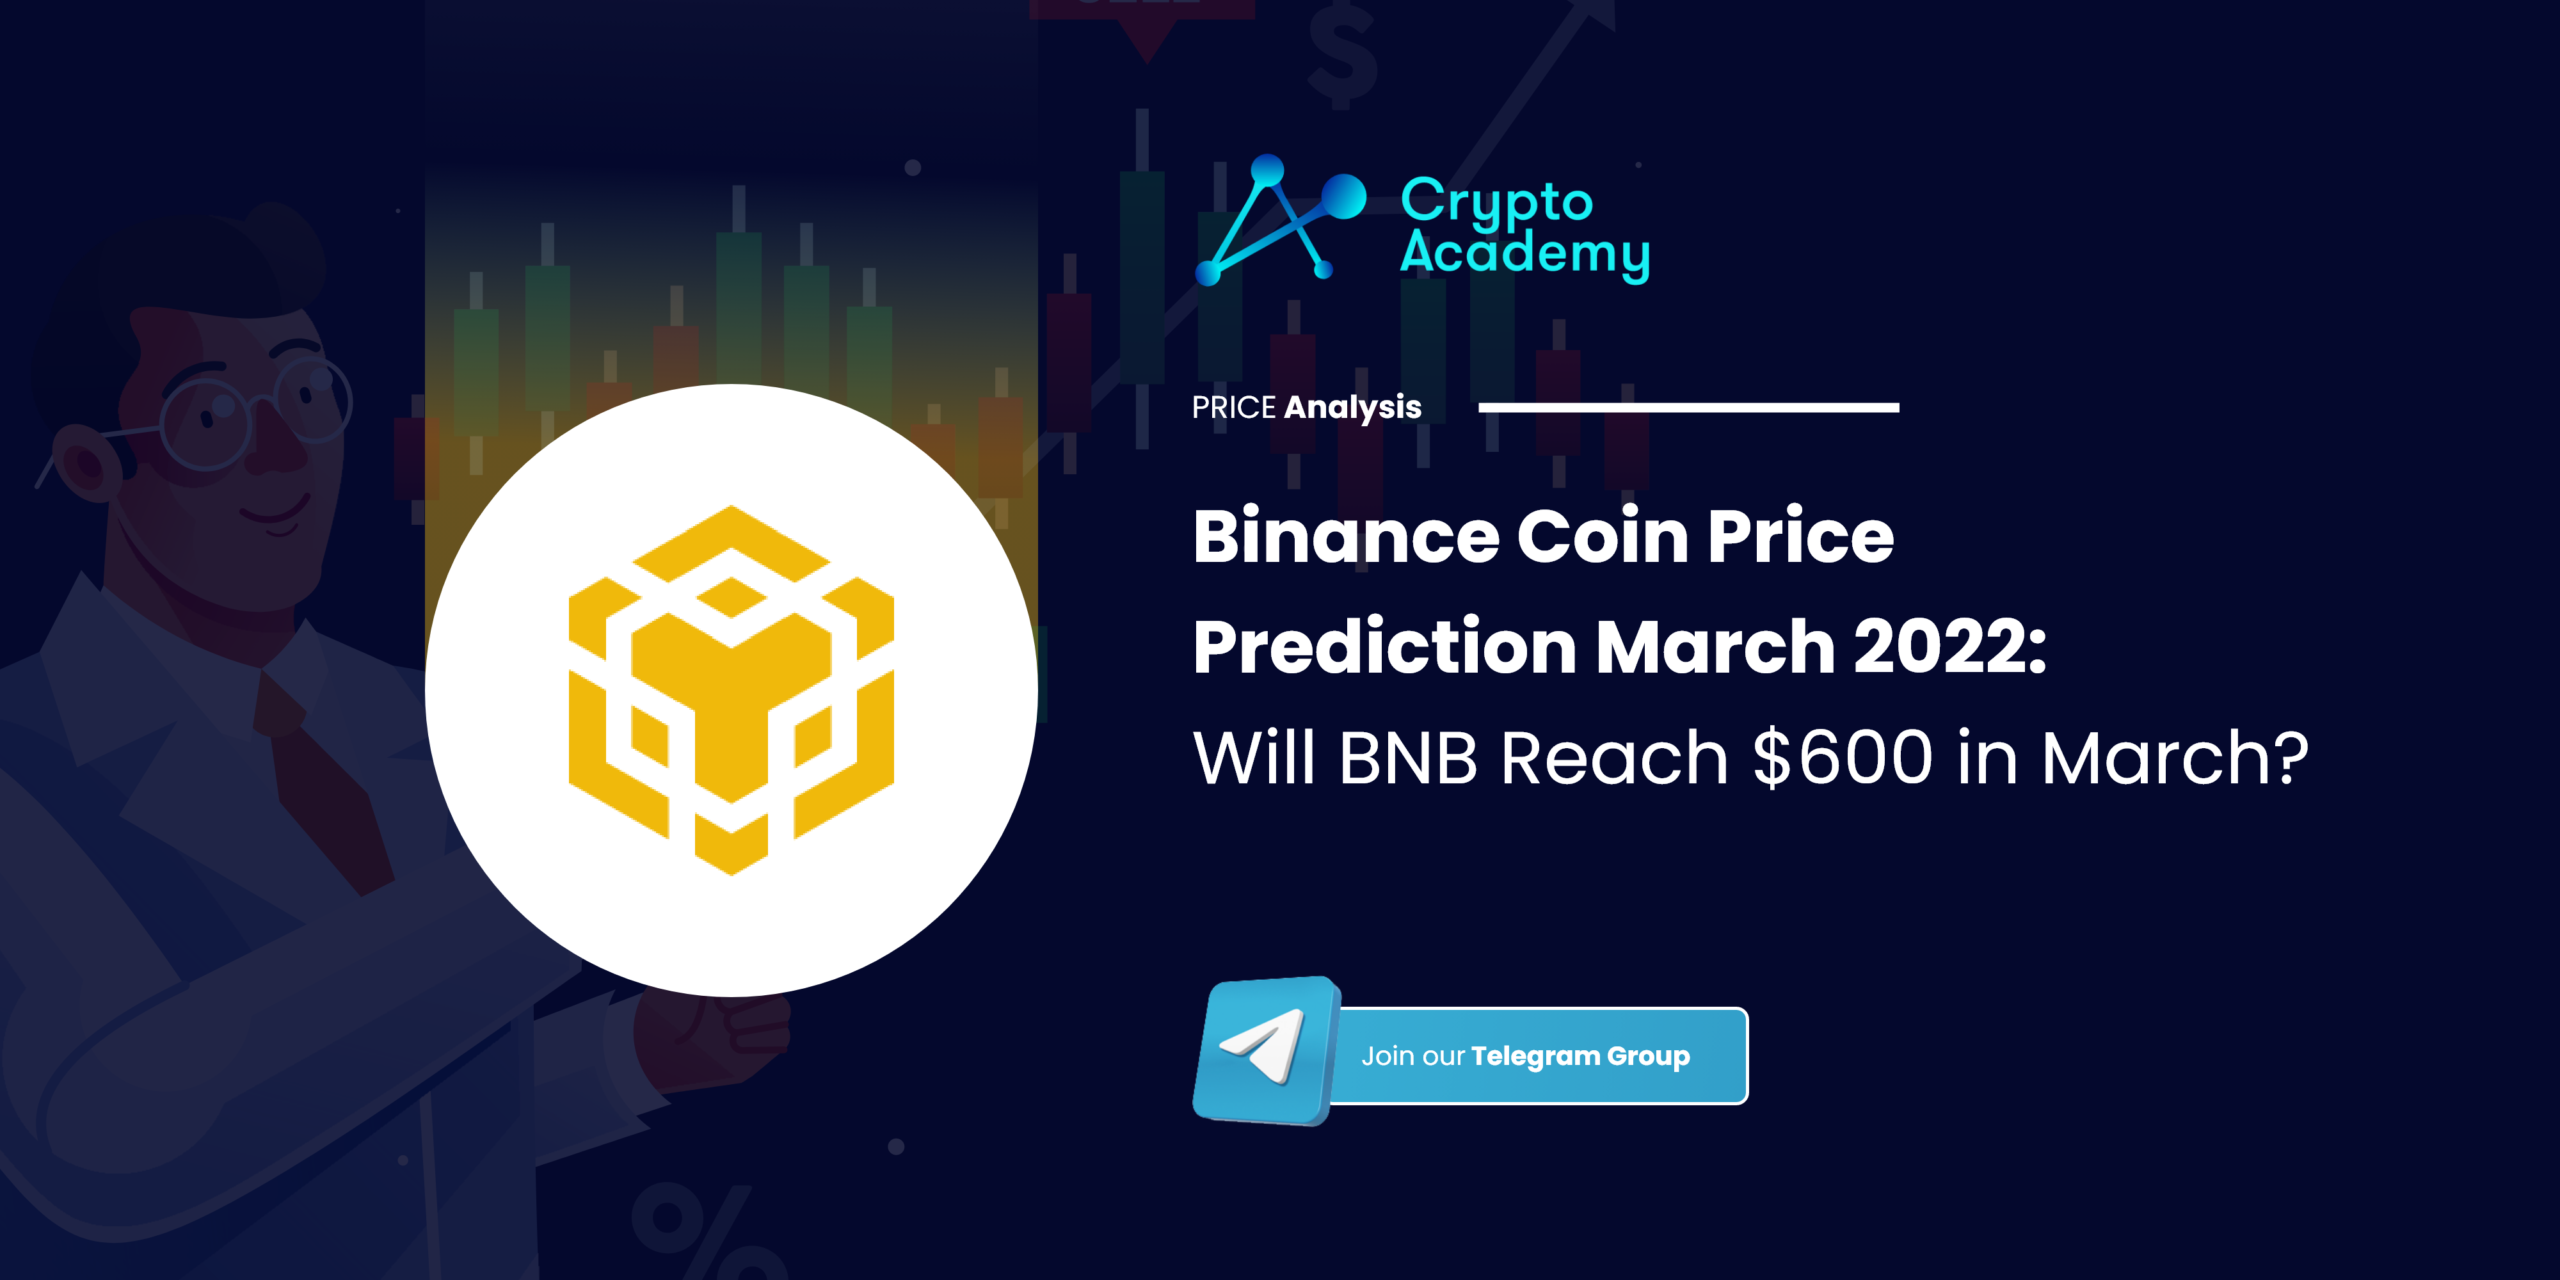 Binance Coin Price Prediction March 2022: Will BNB Reach $600 in March?